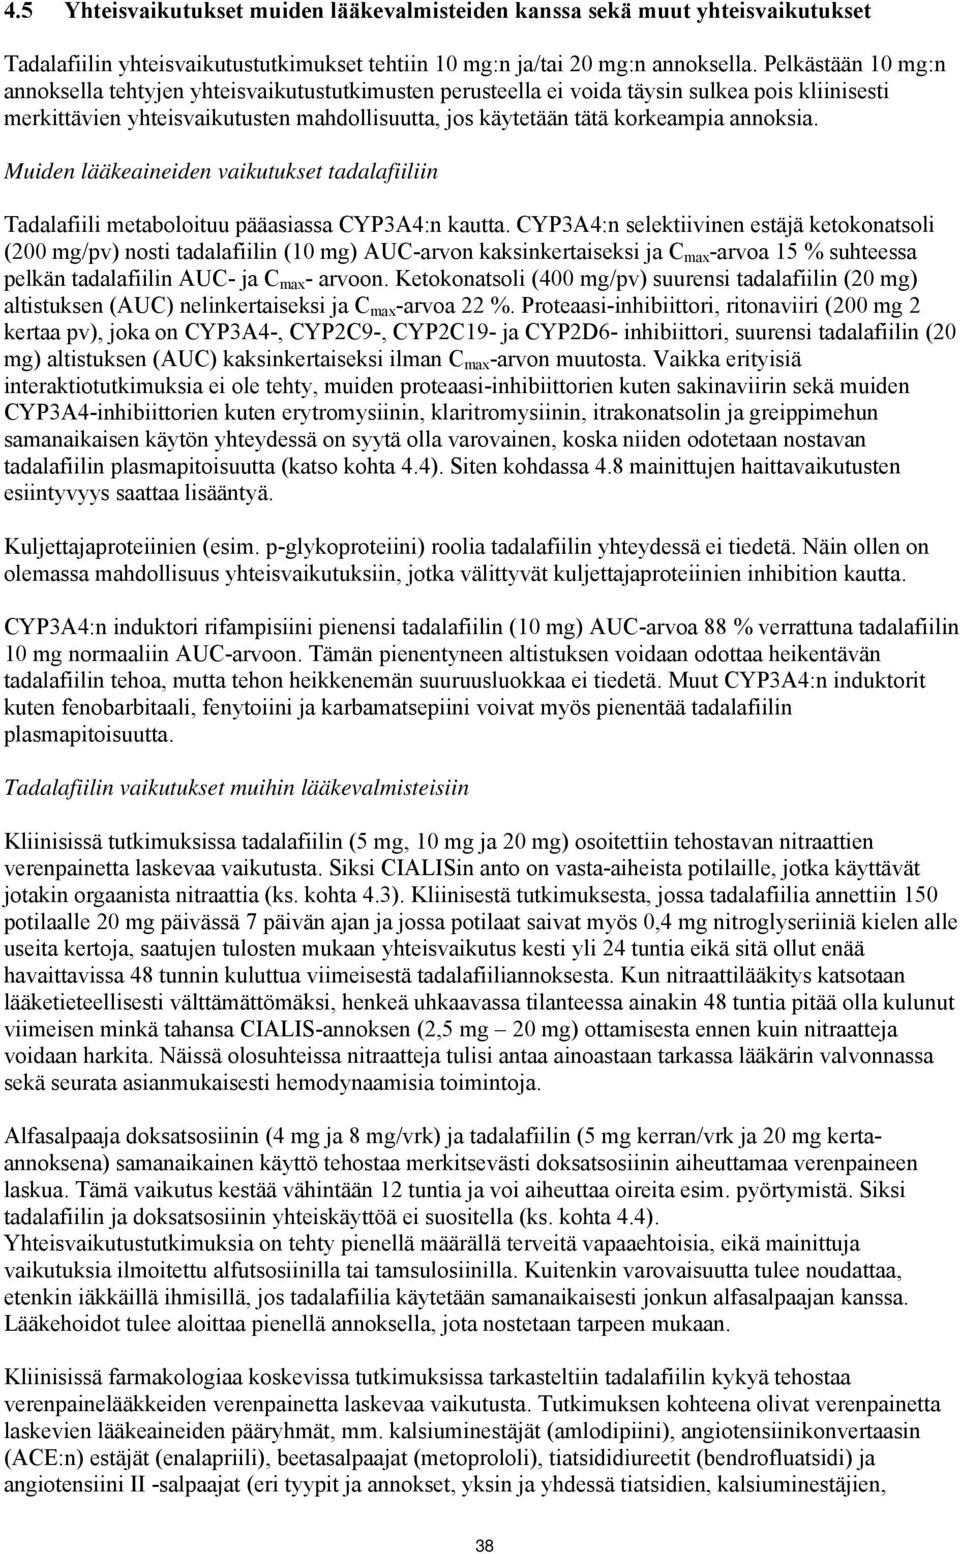 annoksia. Muiden lääkeaineiden vaikutukset tadalafiiliin Tadalafiili metaboloituu pääasiassa CYP3A4:n kautta.